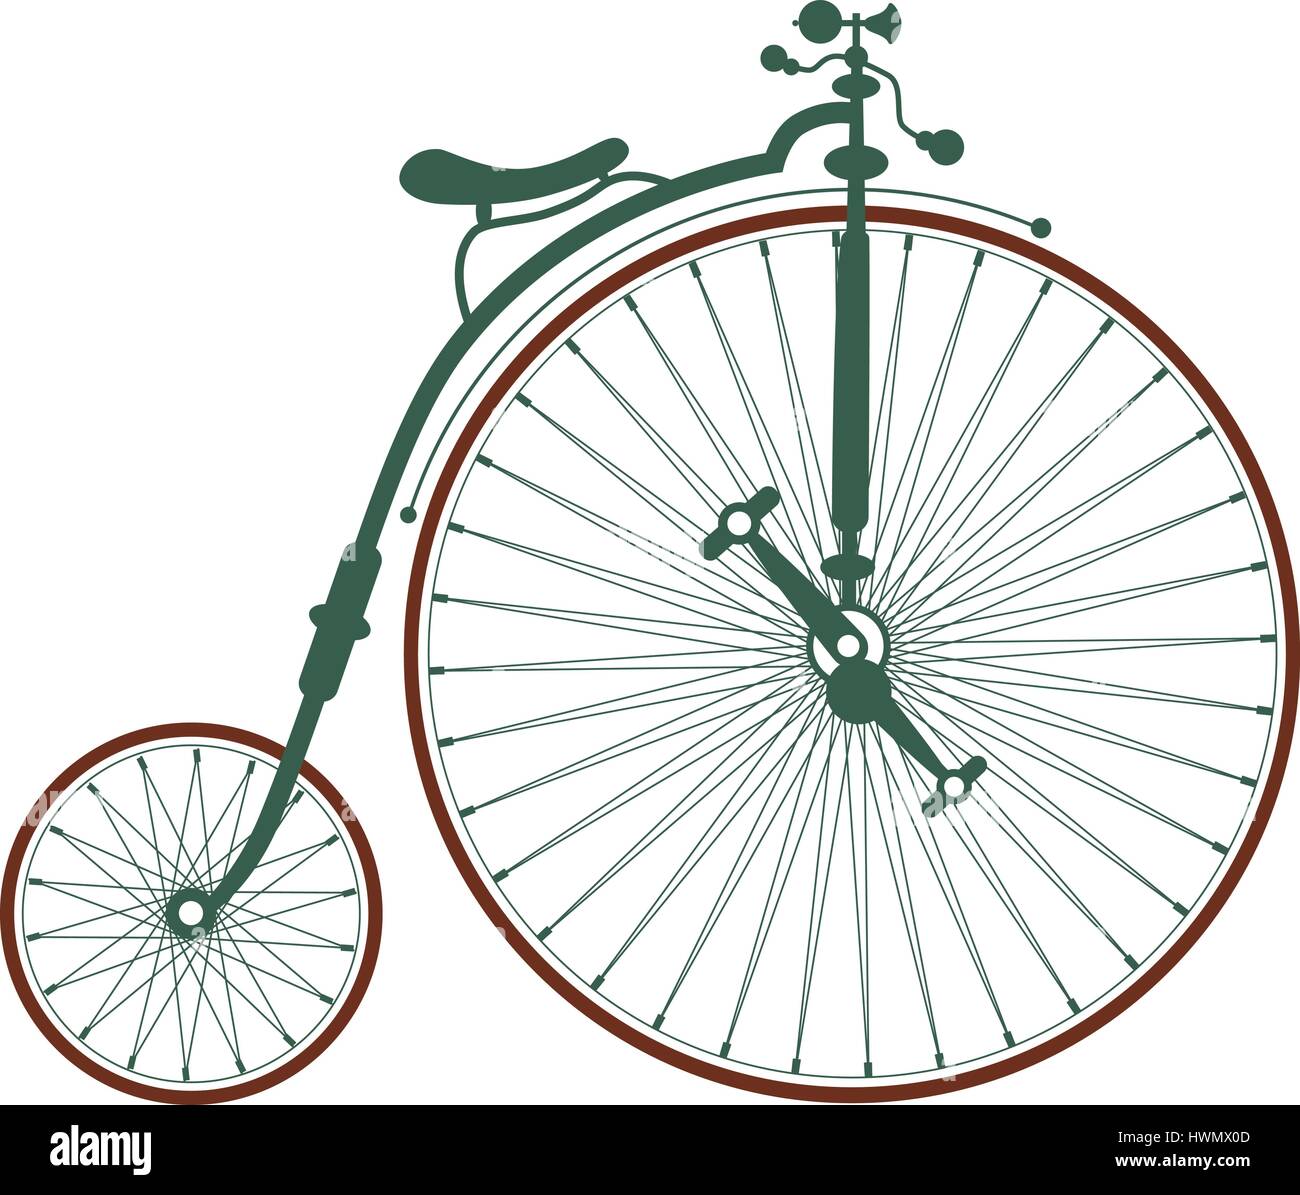 Doodle Stil Antik Fahrrad mit großen Vorderreifen im Vektor-format Stock Vektor